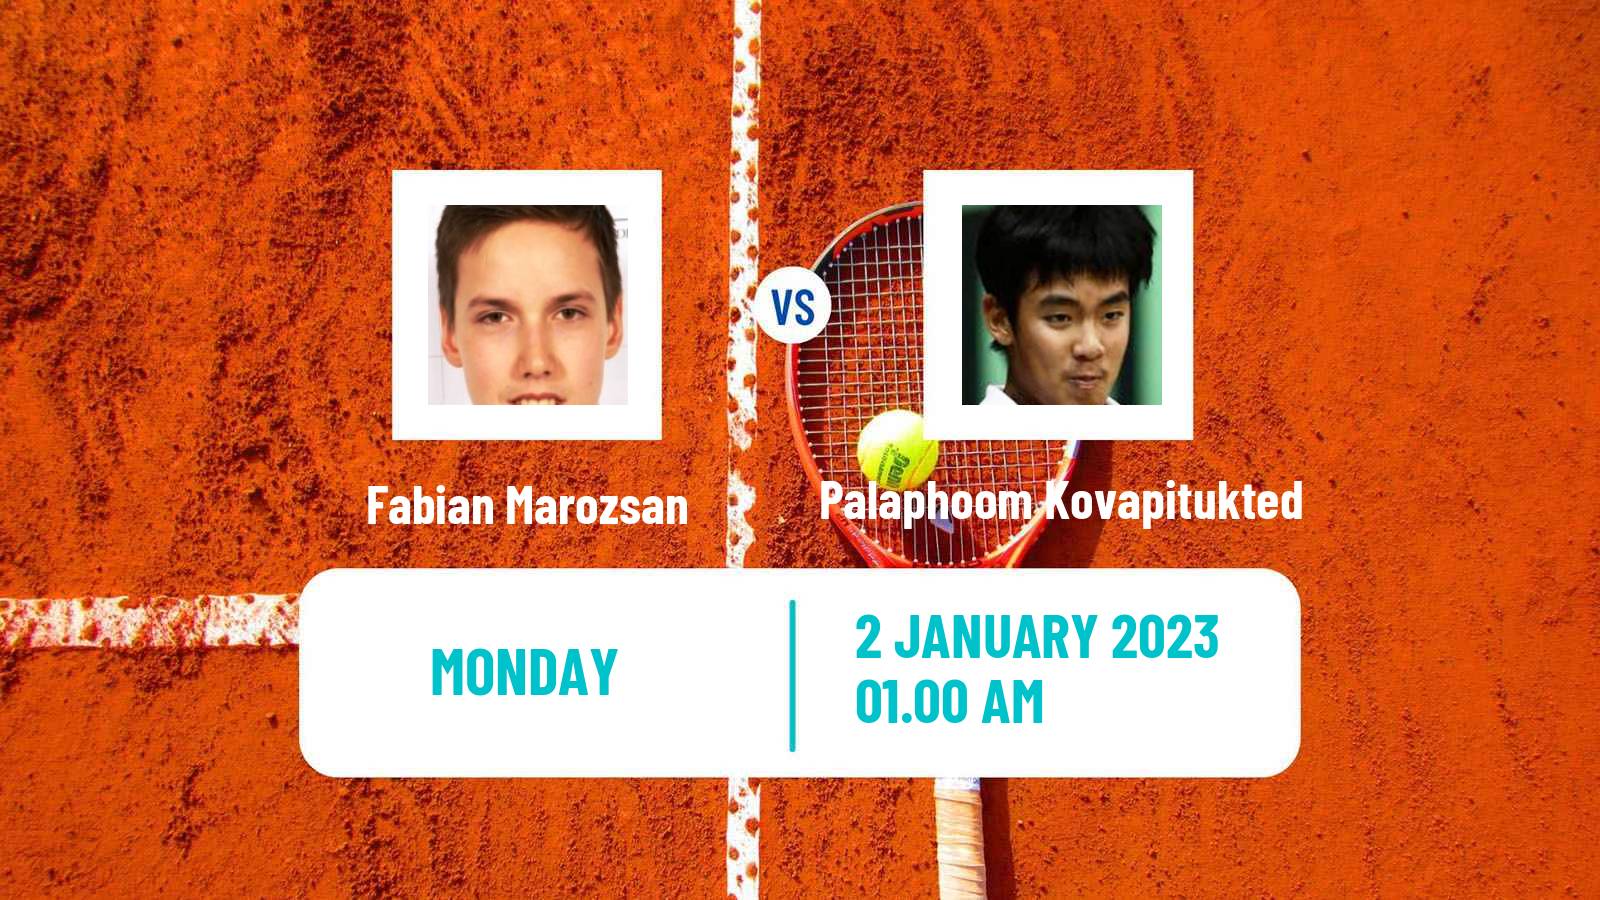 Tennis ATP Challenger Fabian Marozsan - Palaphoom Kovapitukted